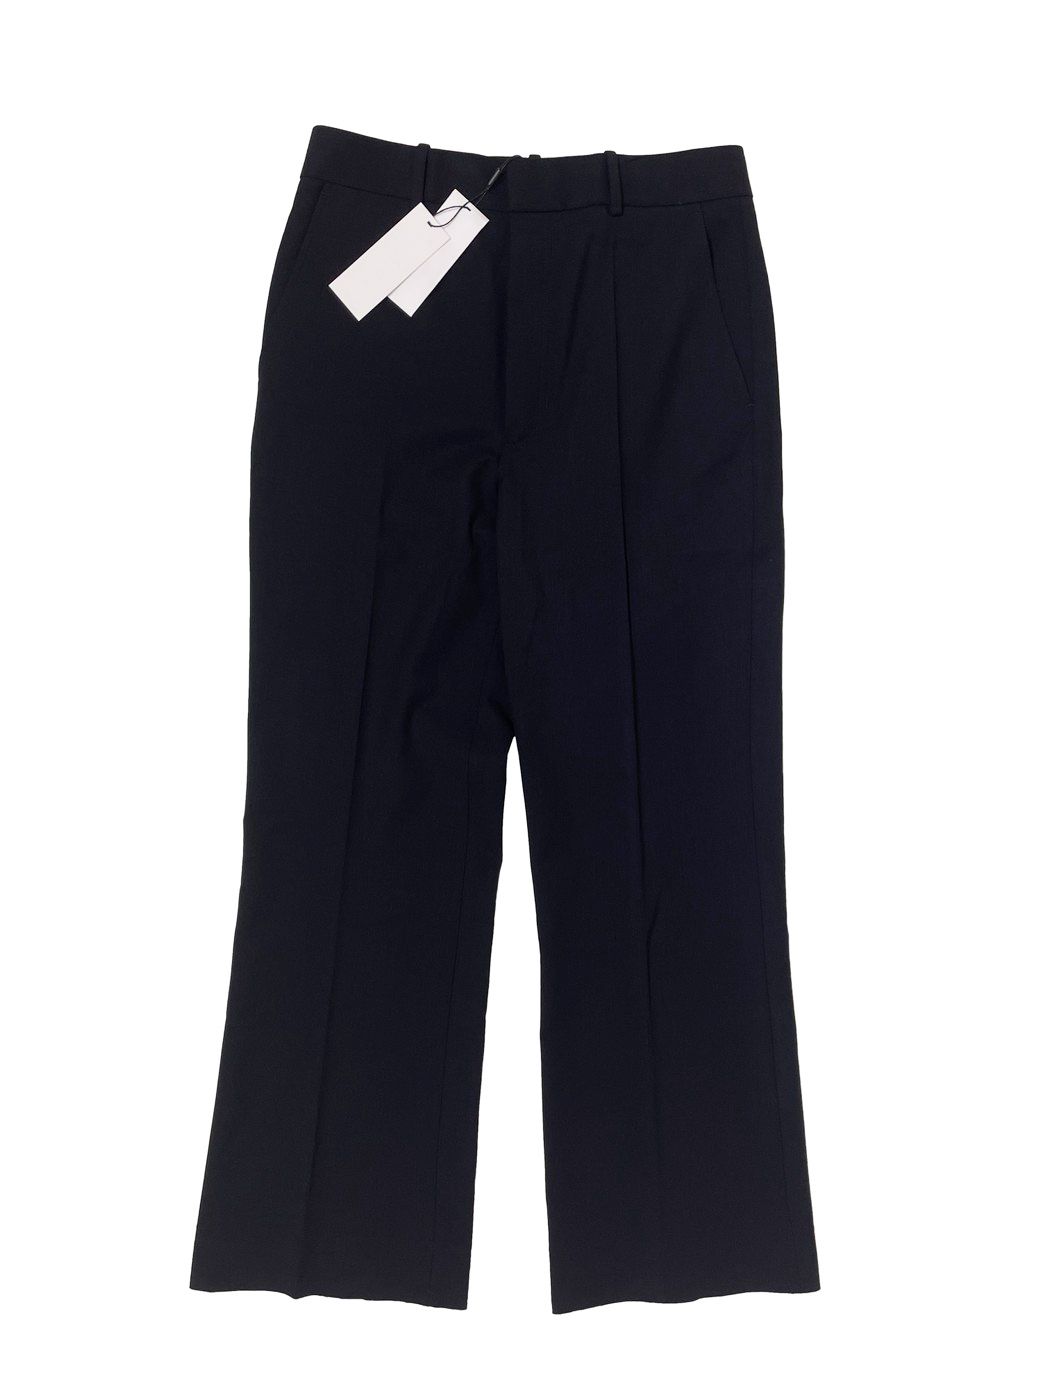 Pre-owned Helmut Lang Black Suit Pants Trousers